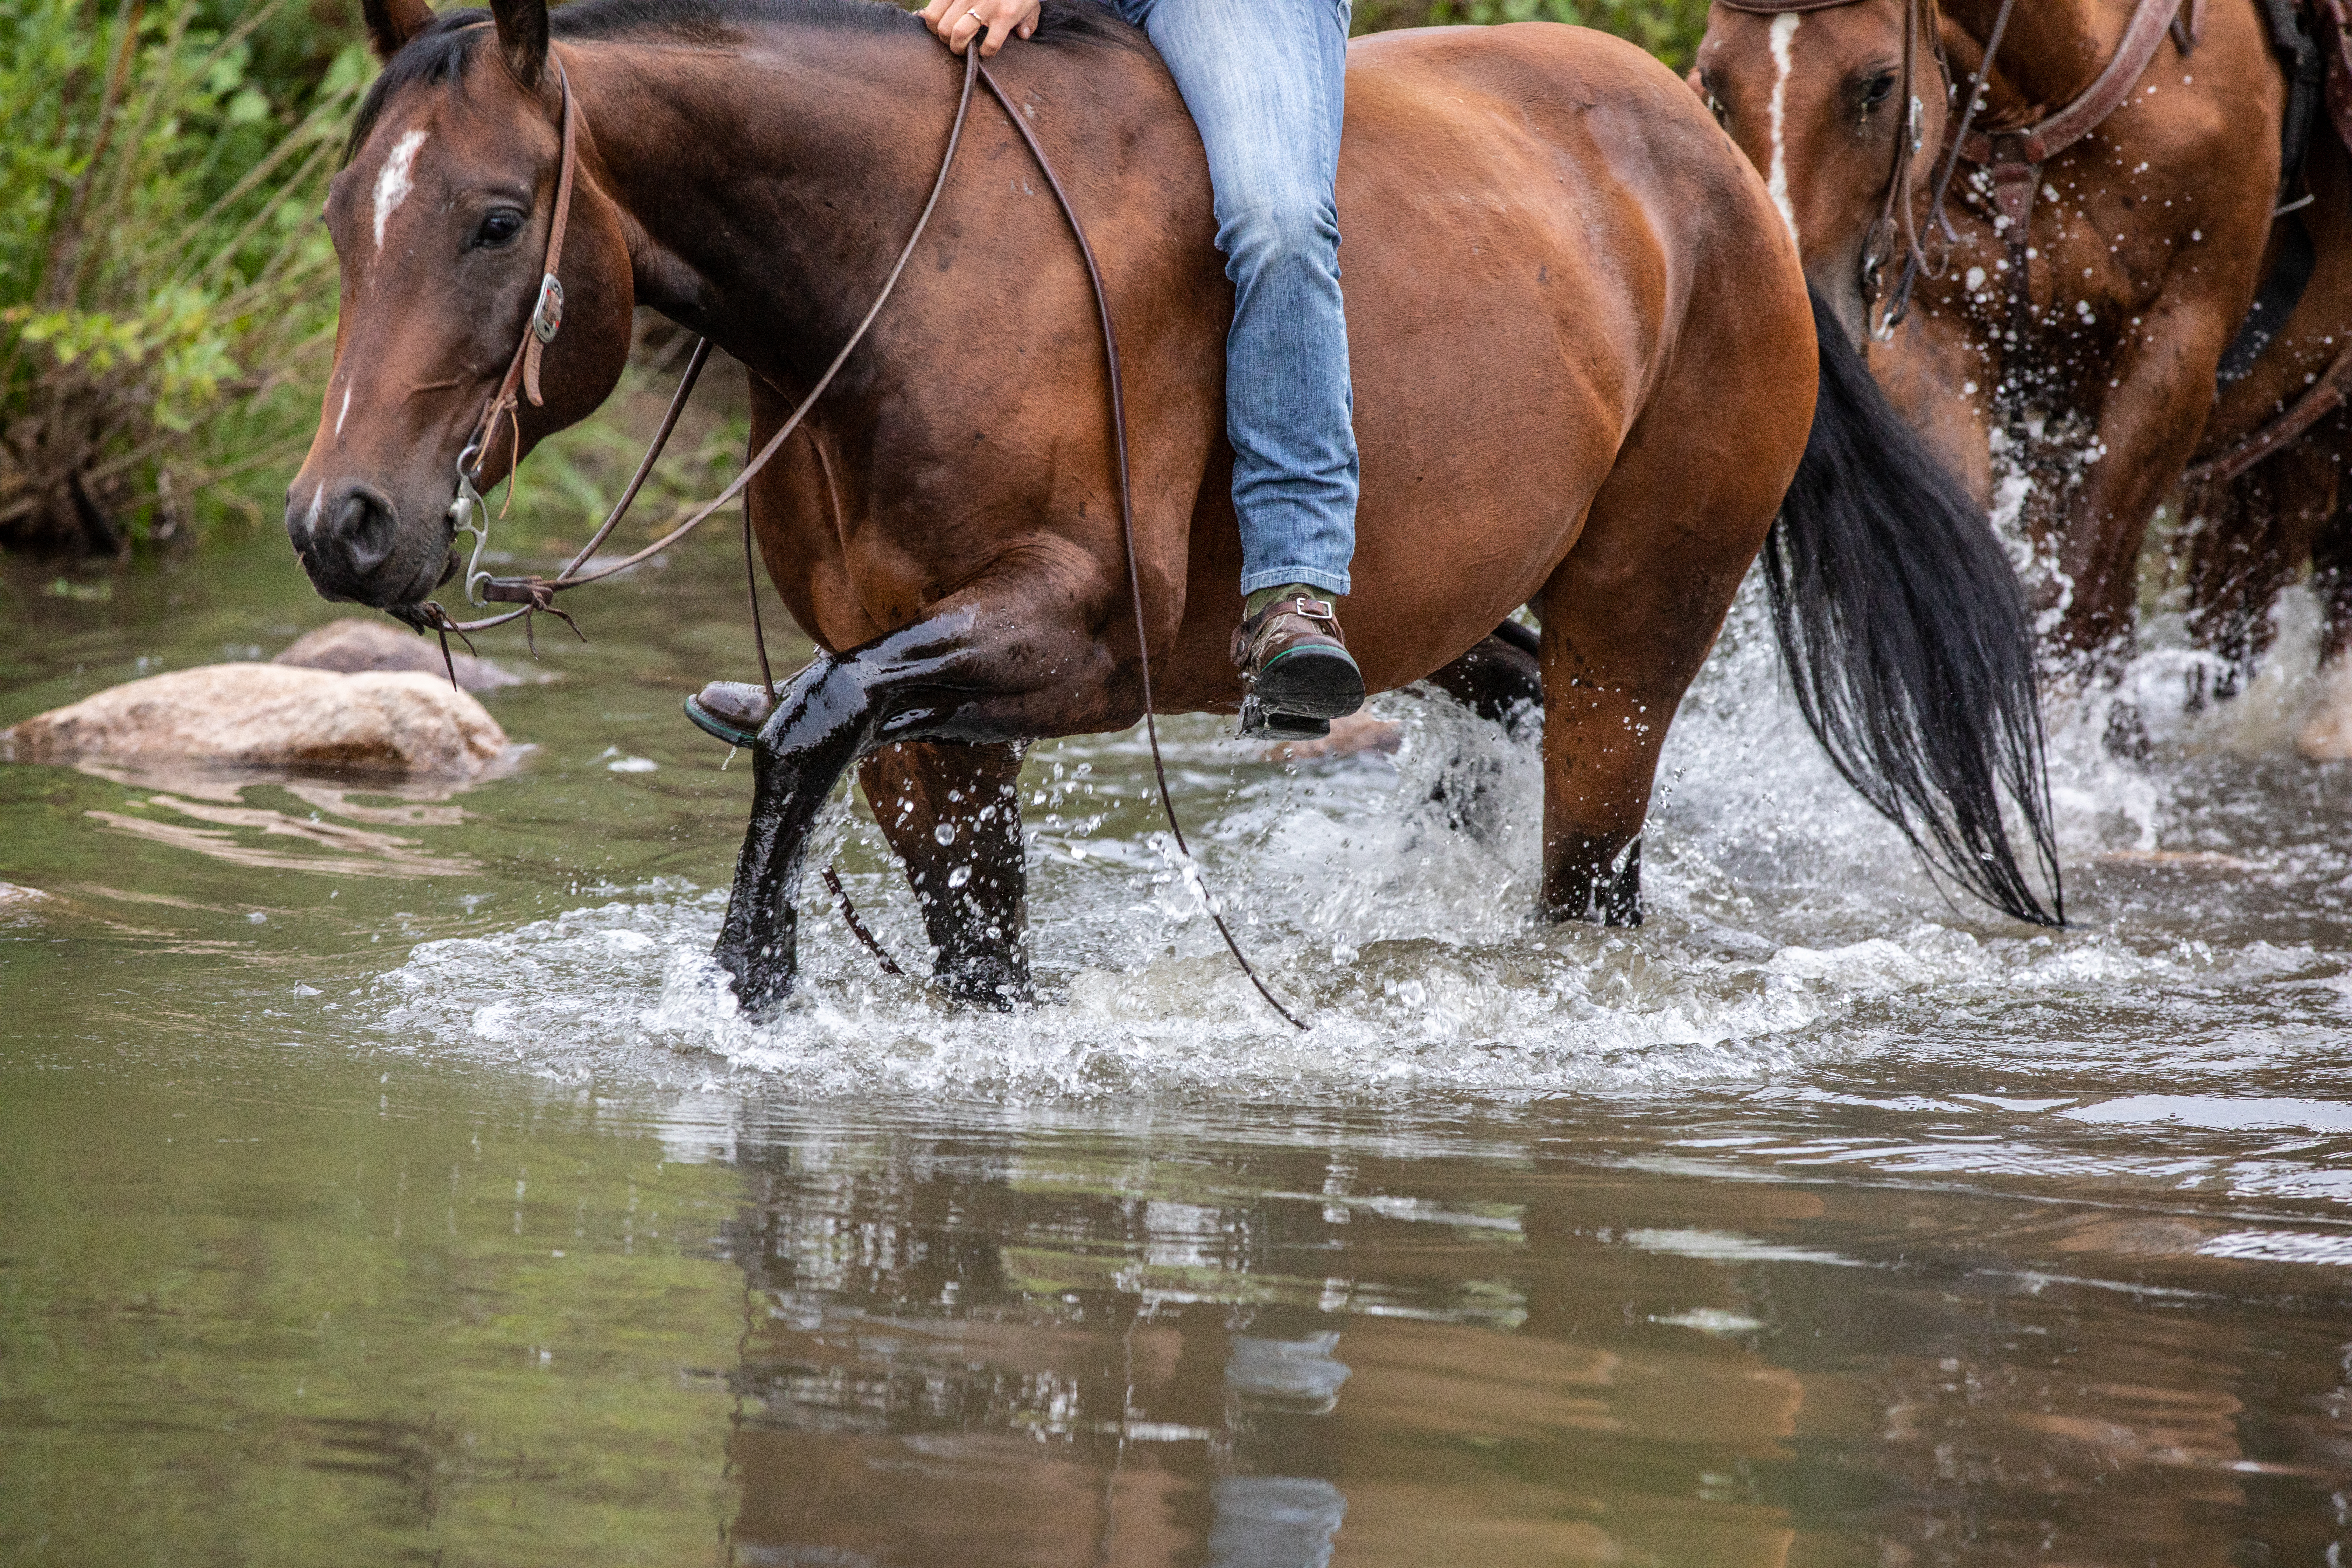 A horse with a bareback rider splashing through water